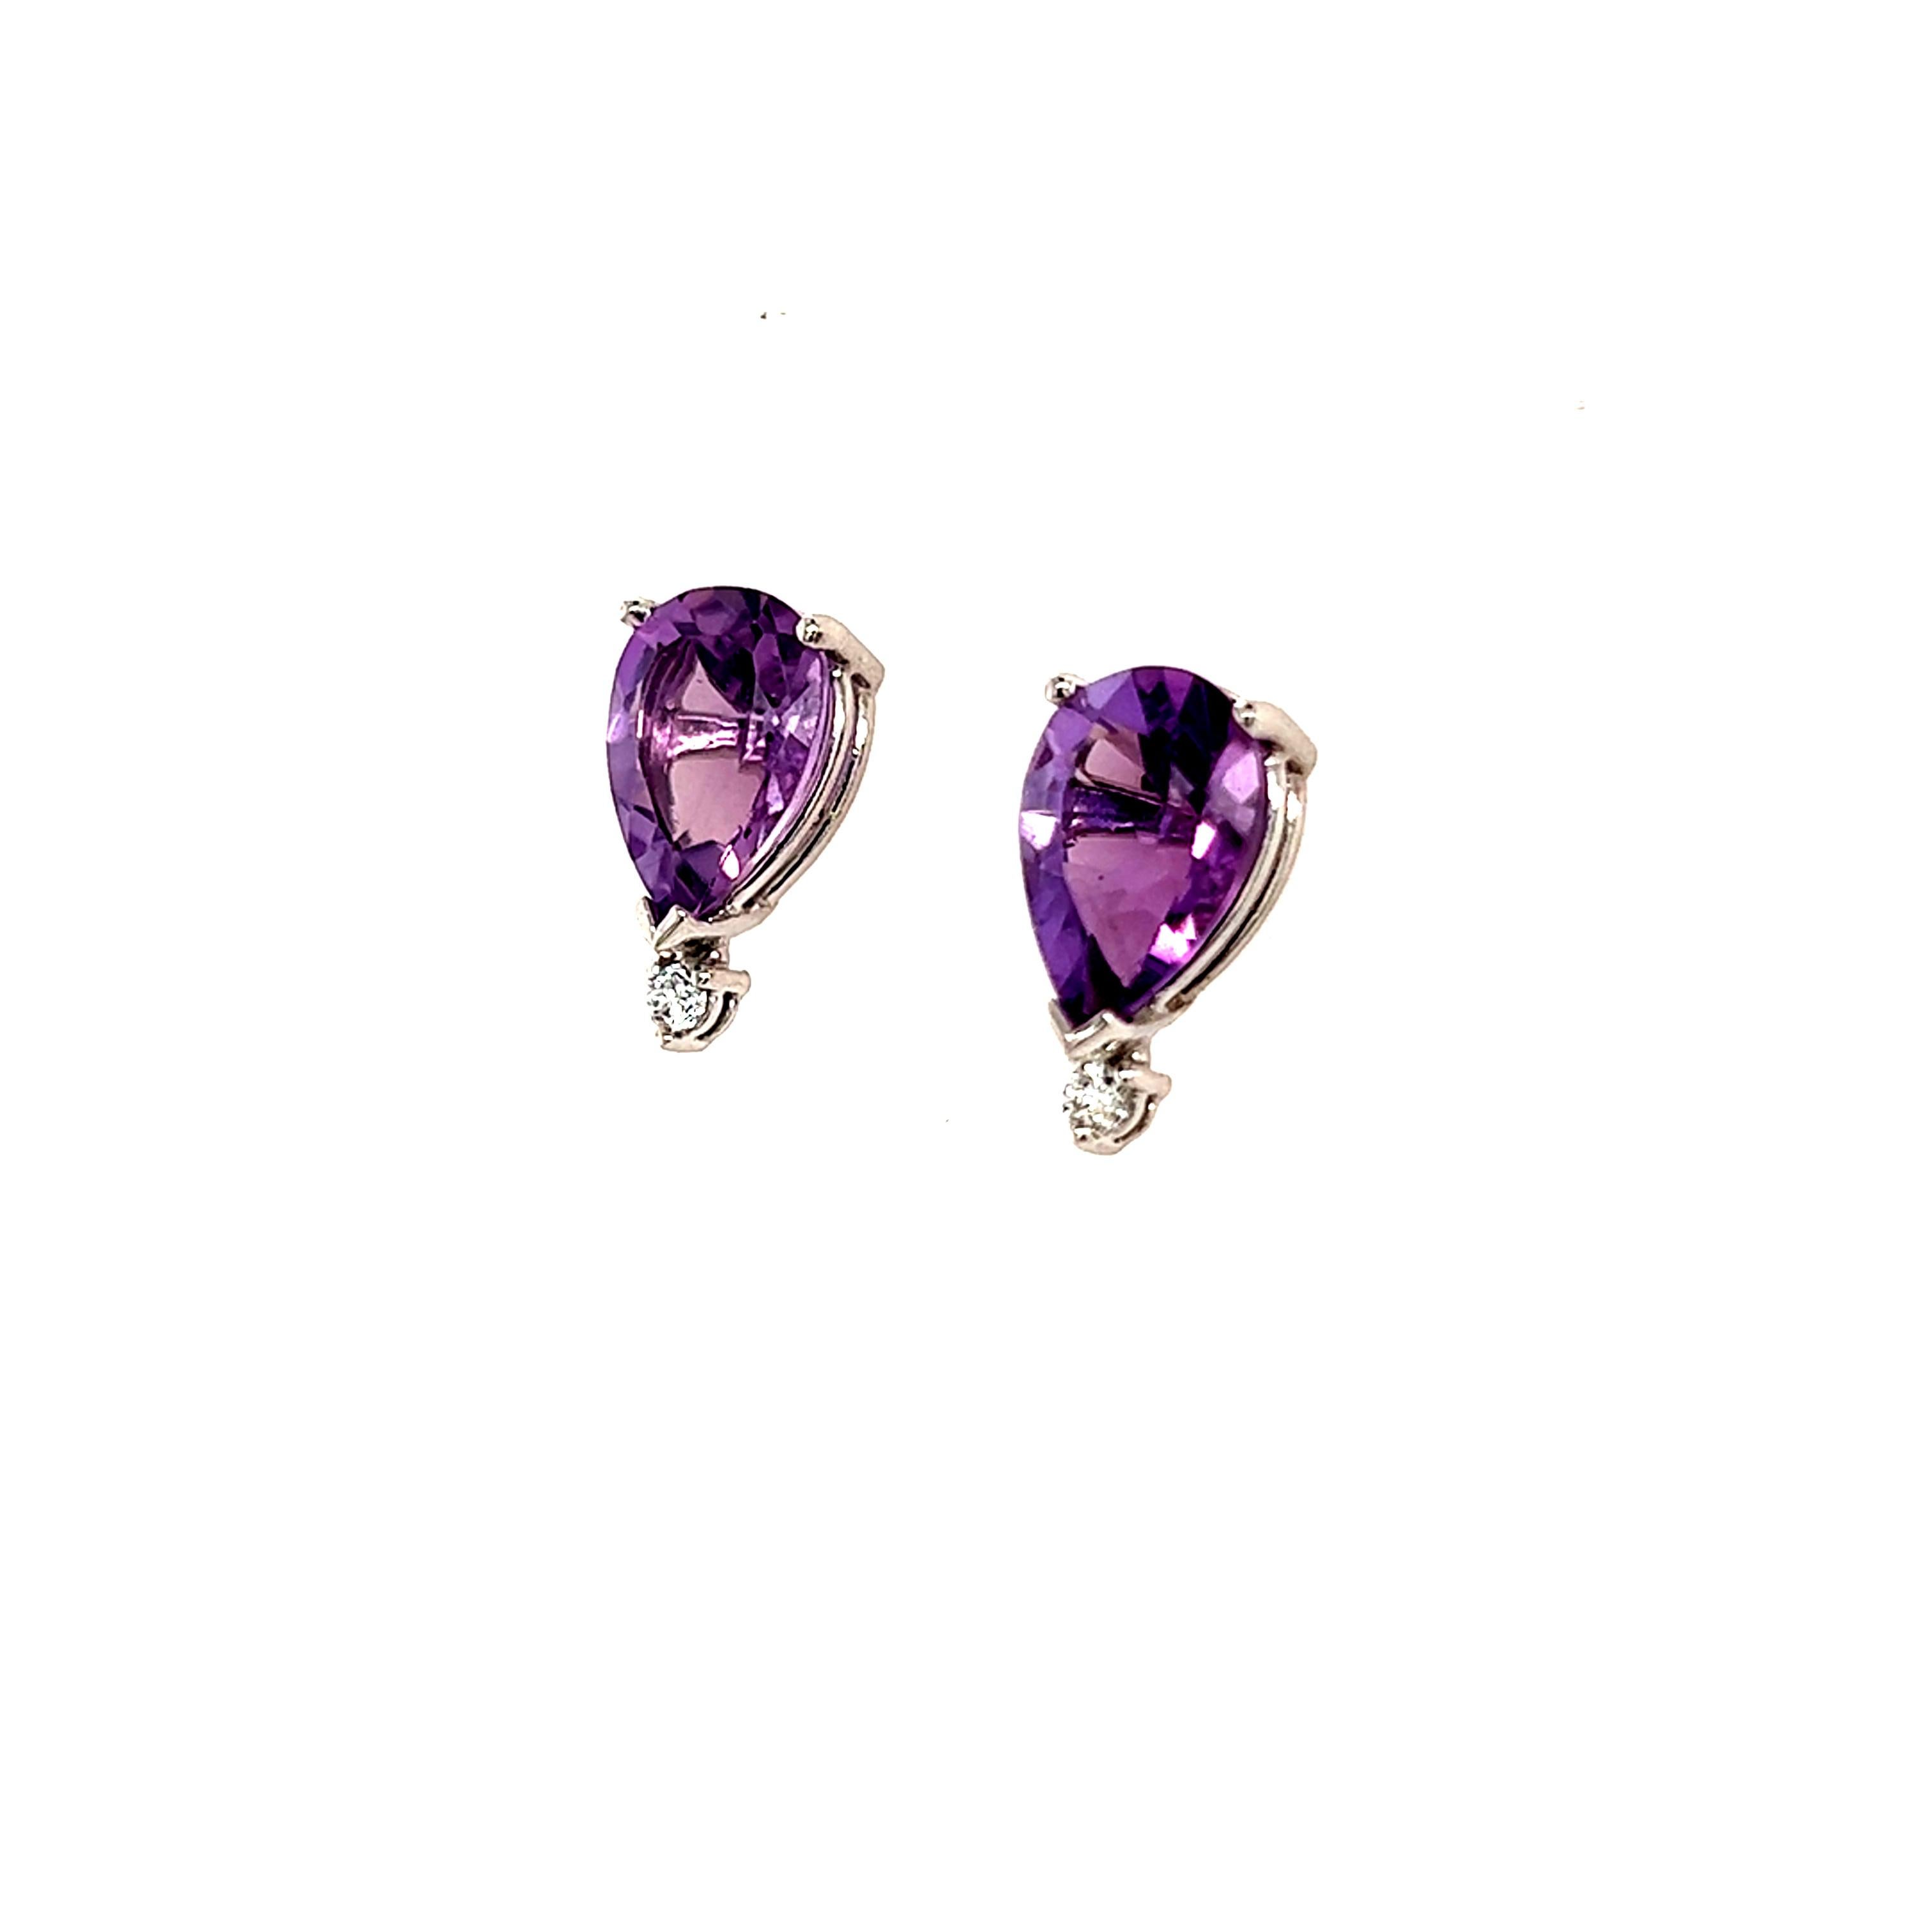 Pear Cut Natural Amethyst Diamond Earrings 14k Gold 3.71 TCW Certified For Sale